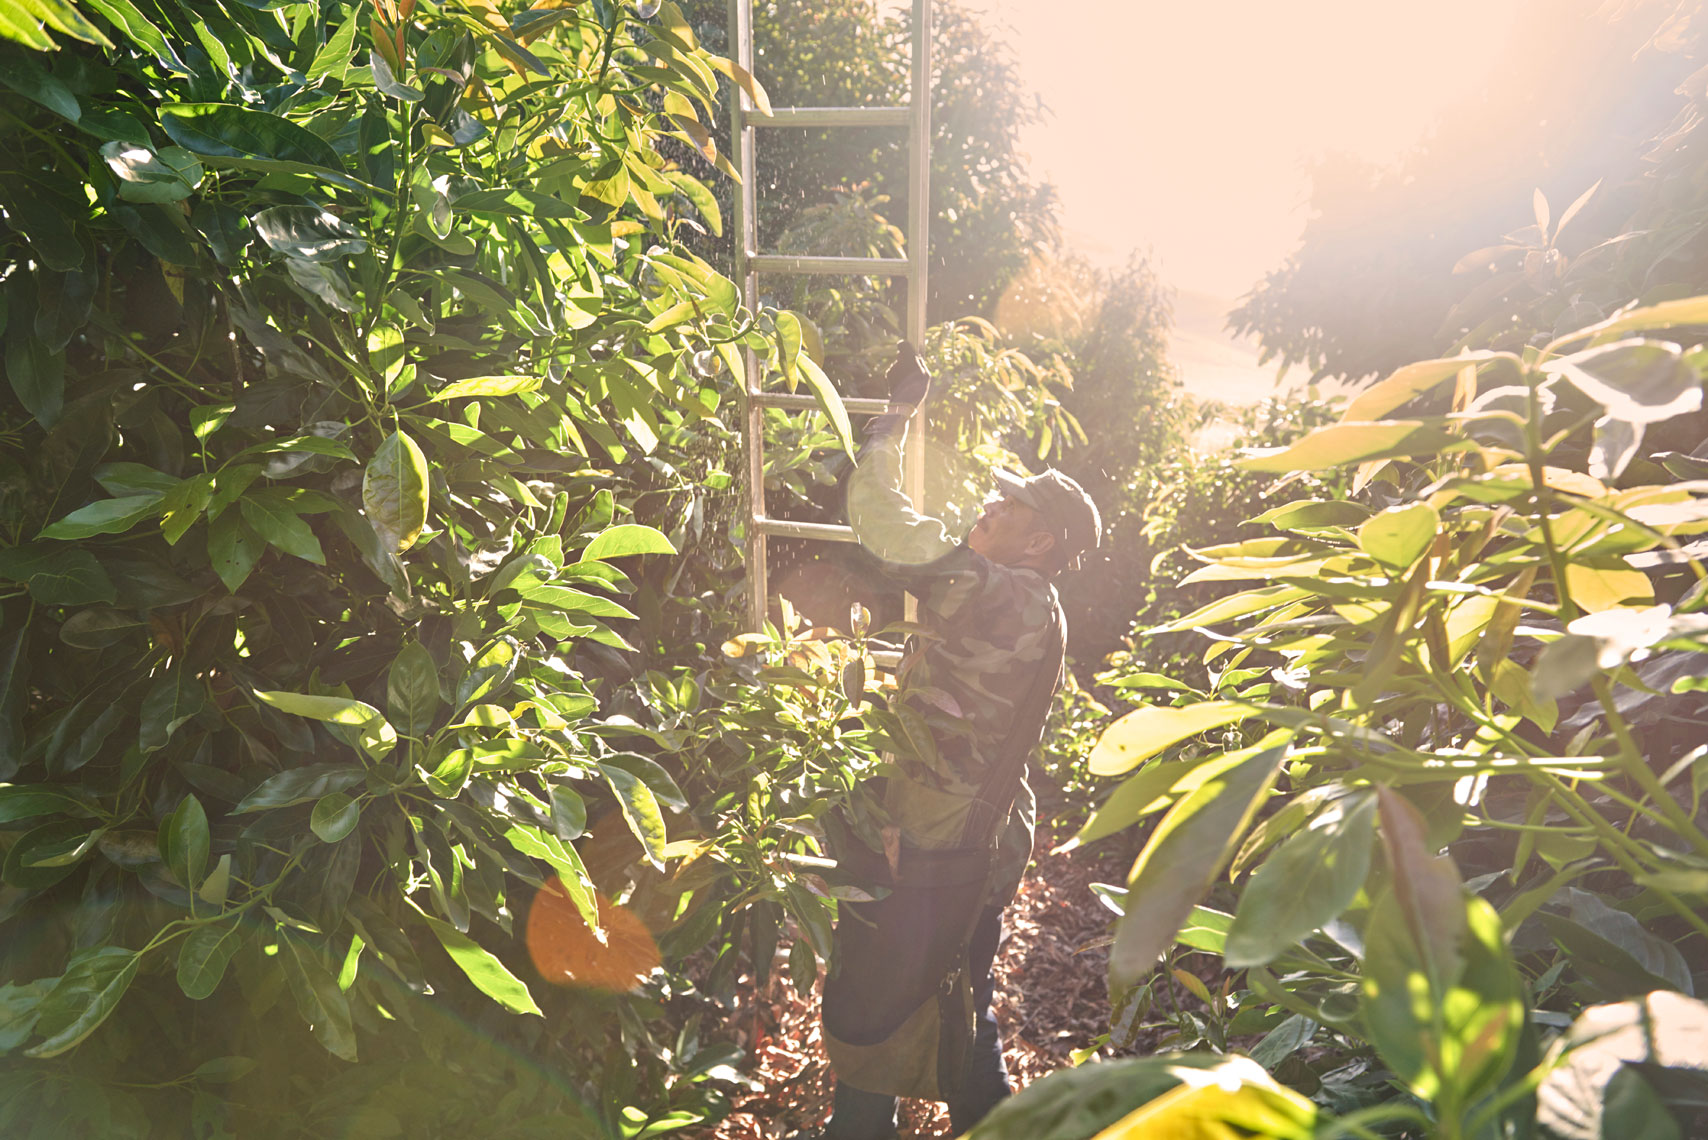 Avocado-picker-placing-a-ladder-in-a-avocado-tree-by-Los-Angeles-farm-photographer-Joe-Atlas.